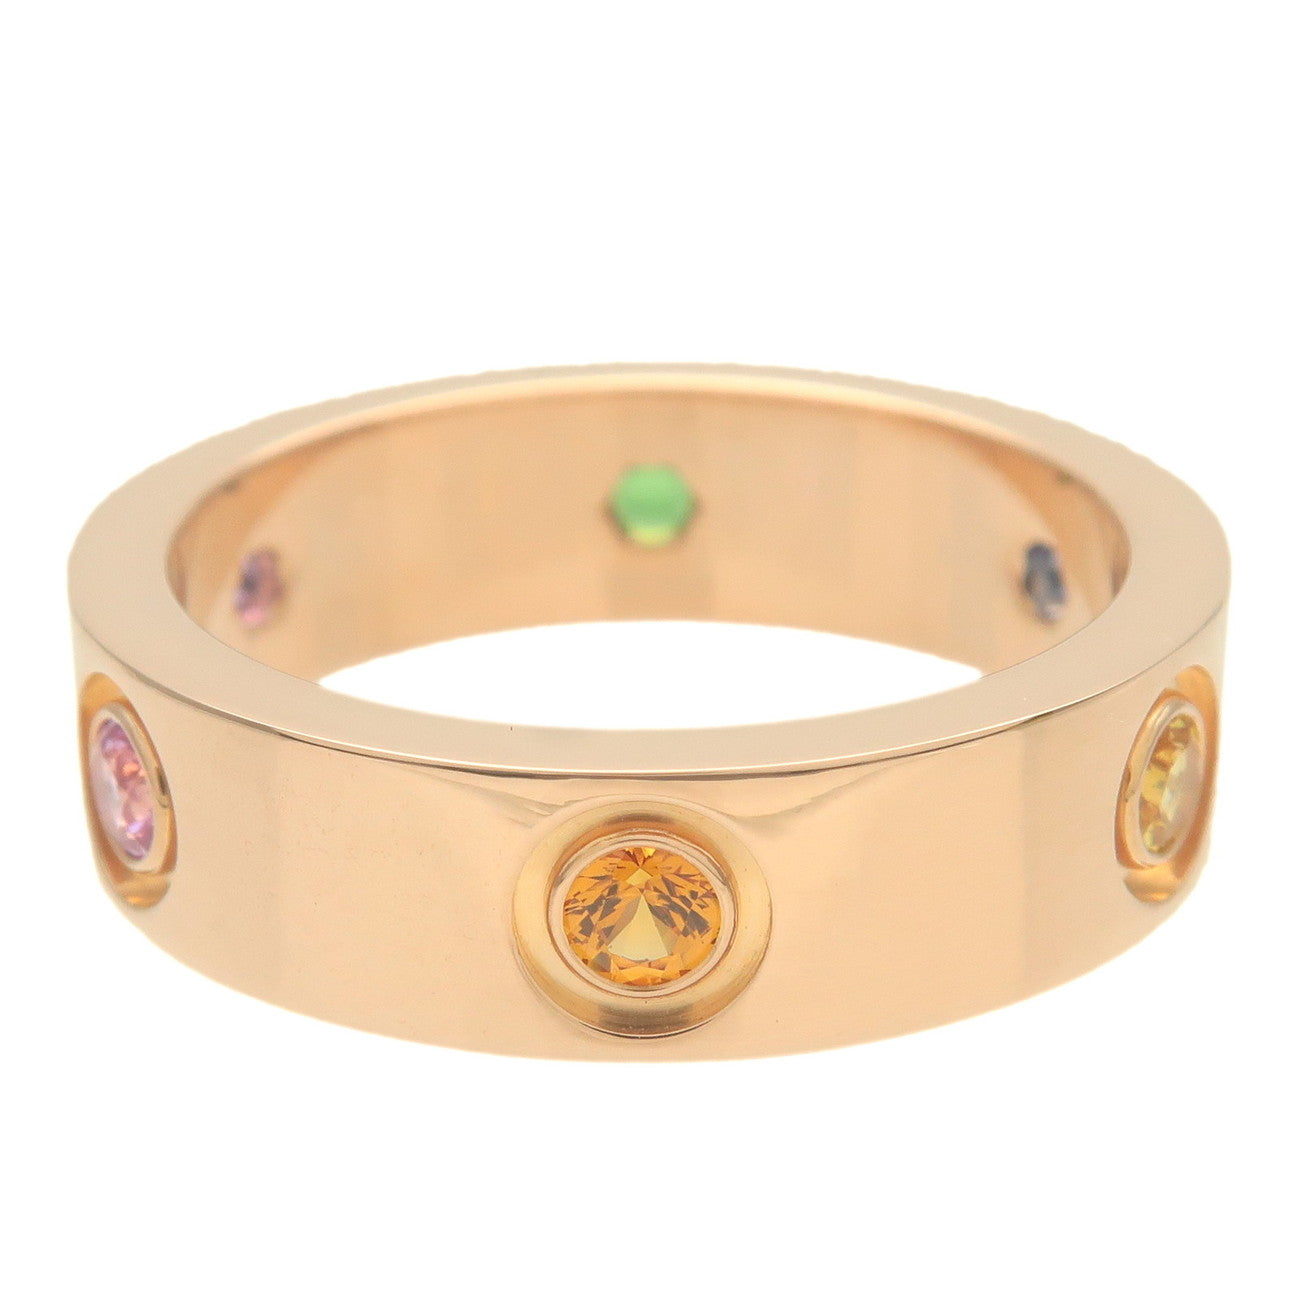 Cartier Love Ring Multi Color Stone #54 K18PG 750PG Rose Gold